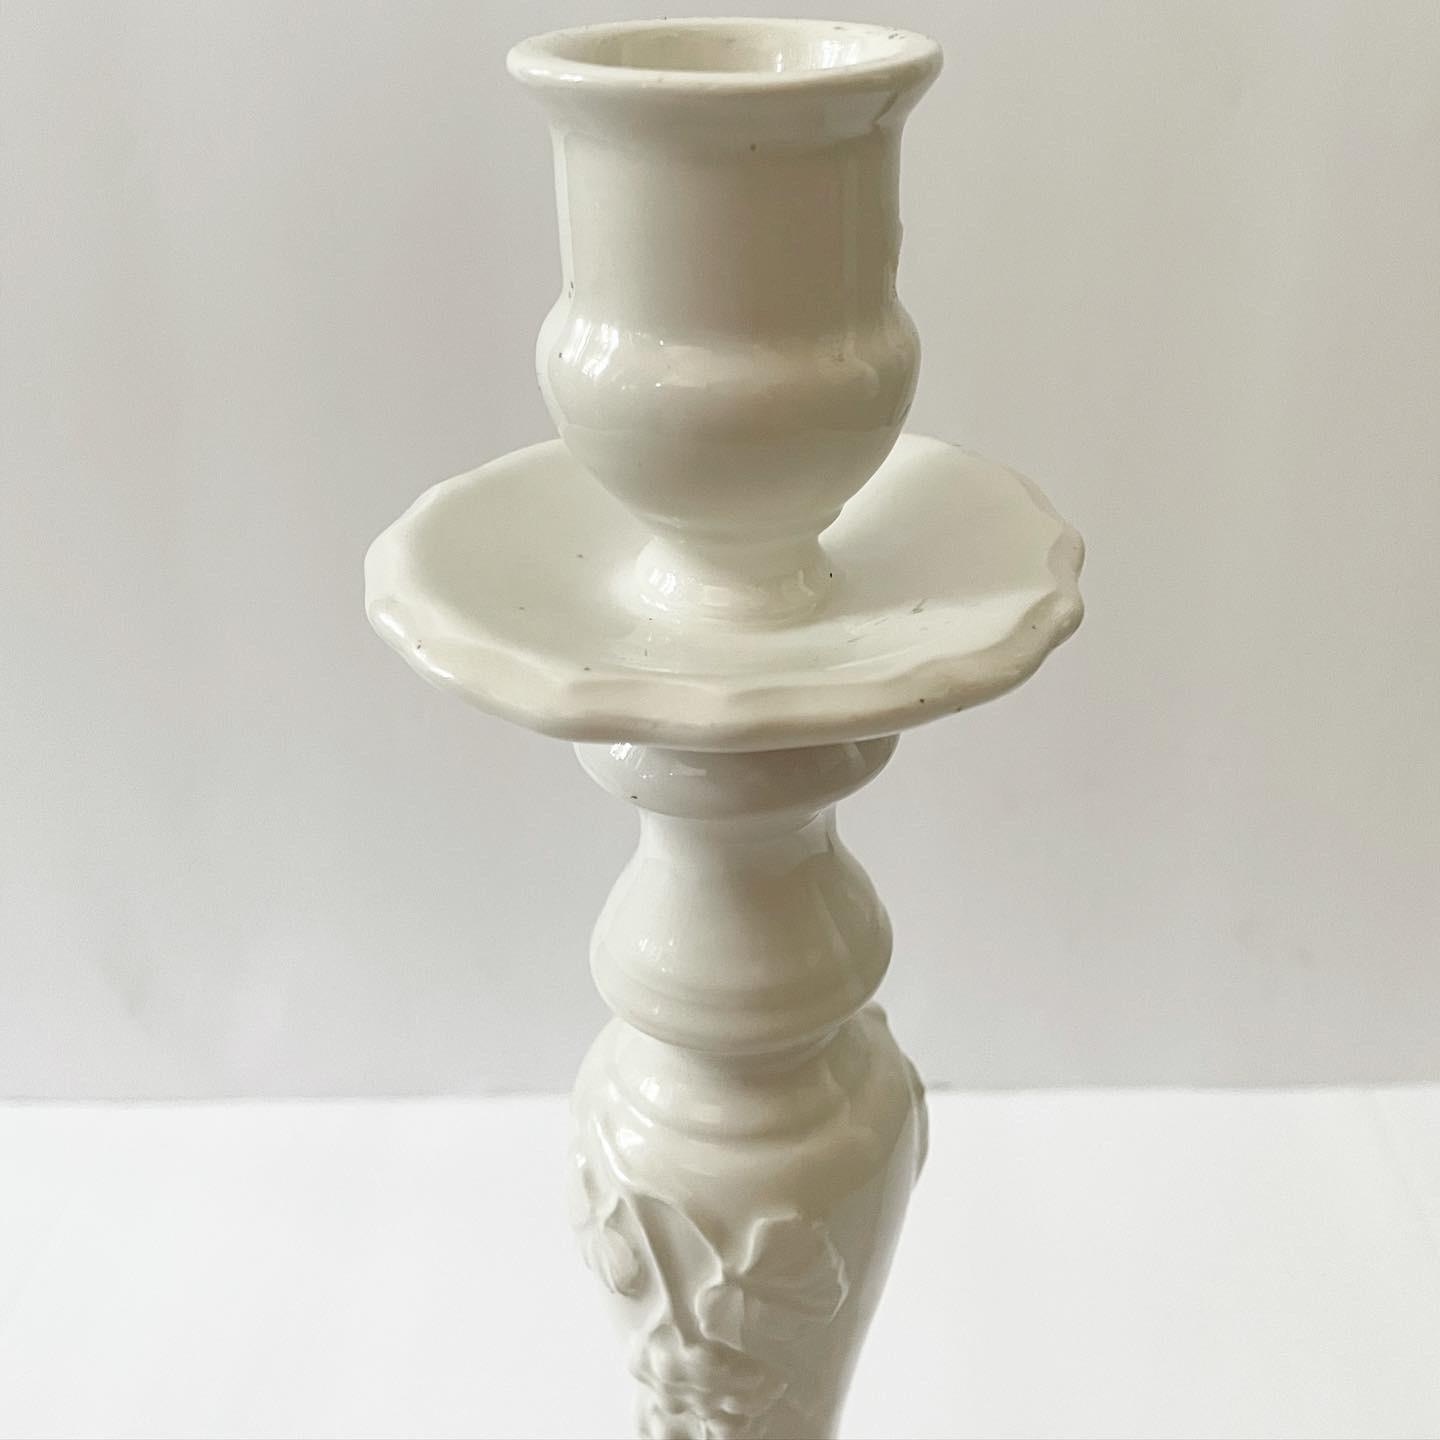 Vintage Large Italian Ceramic Candle Holders